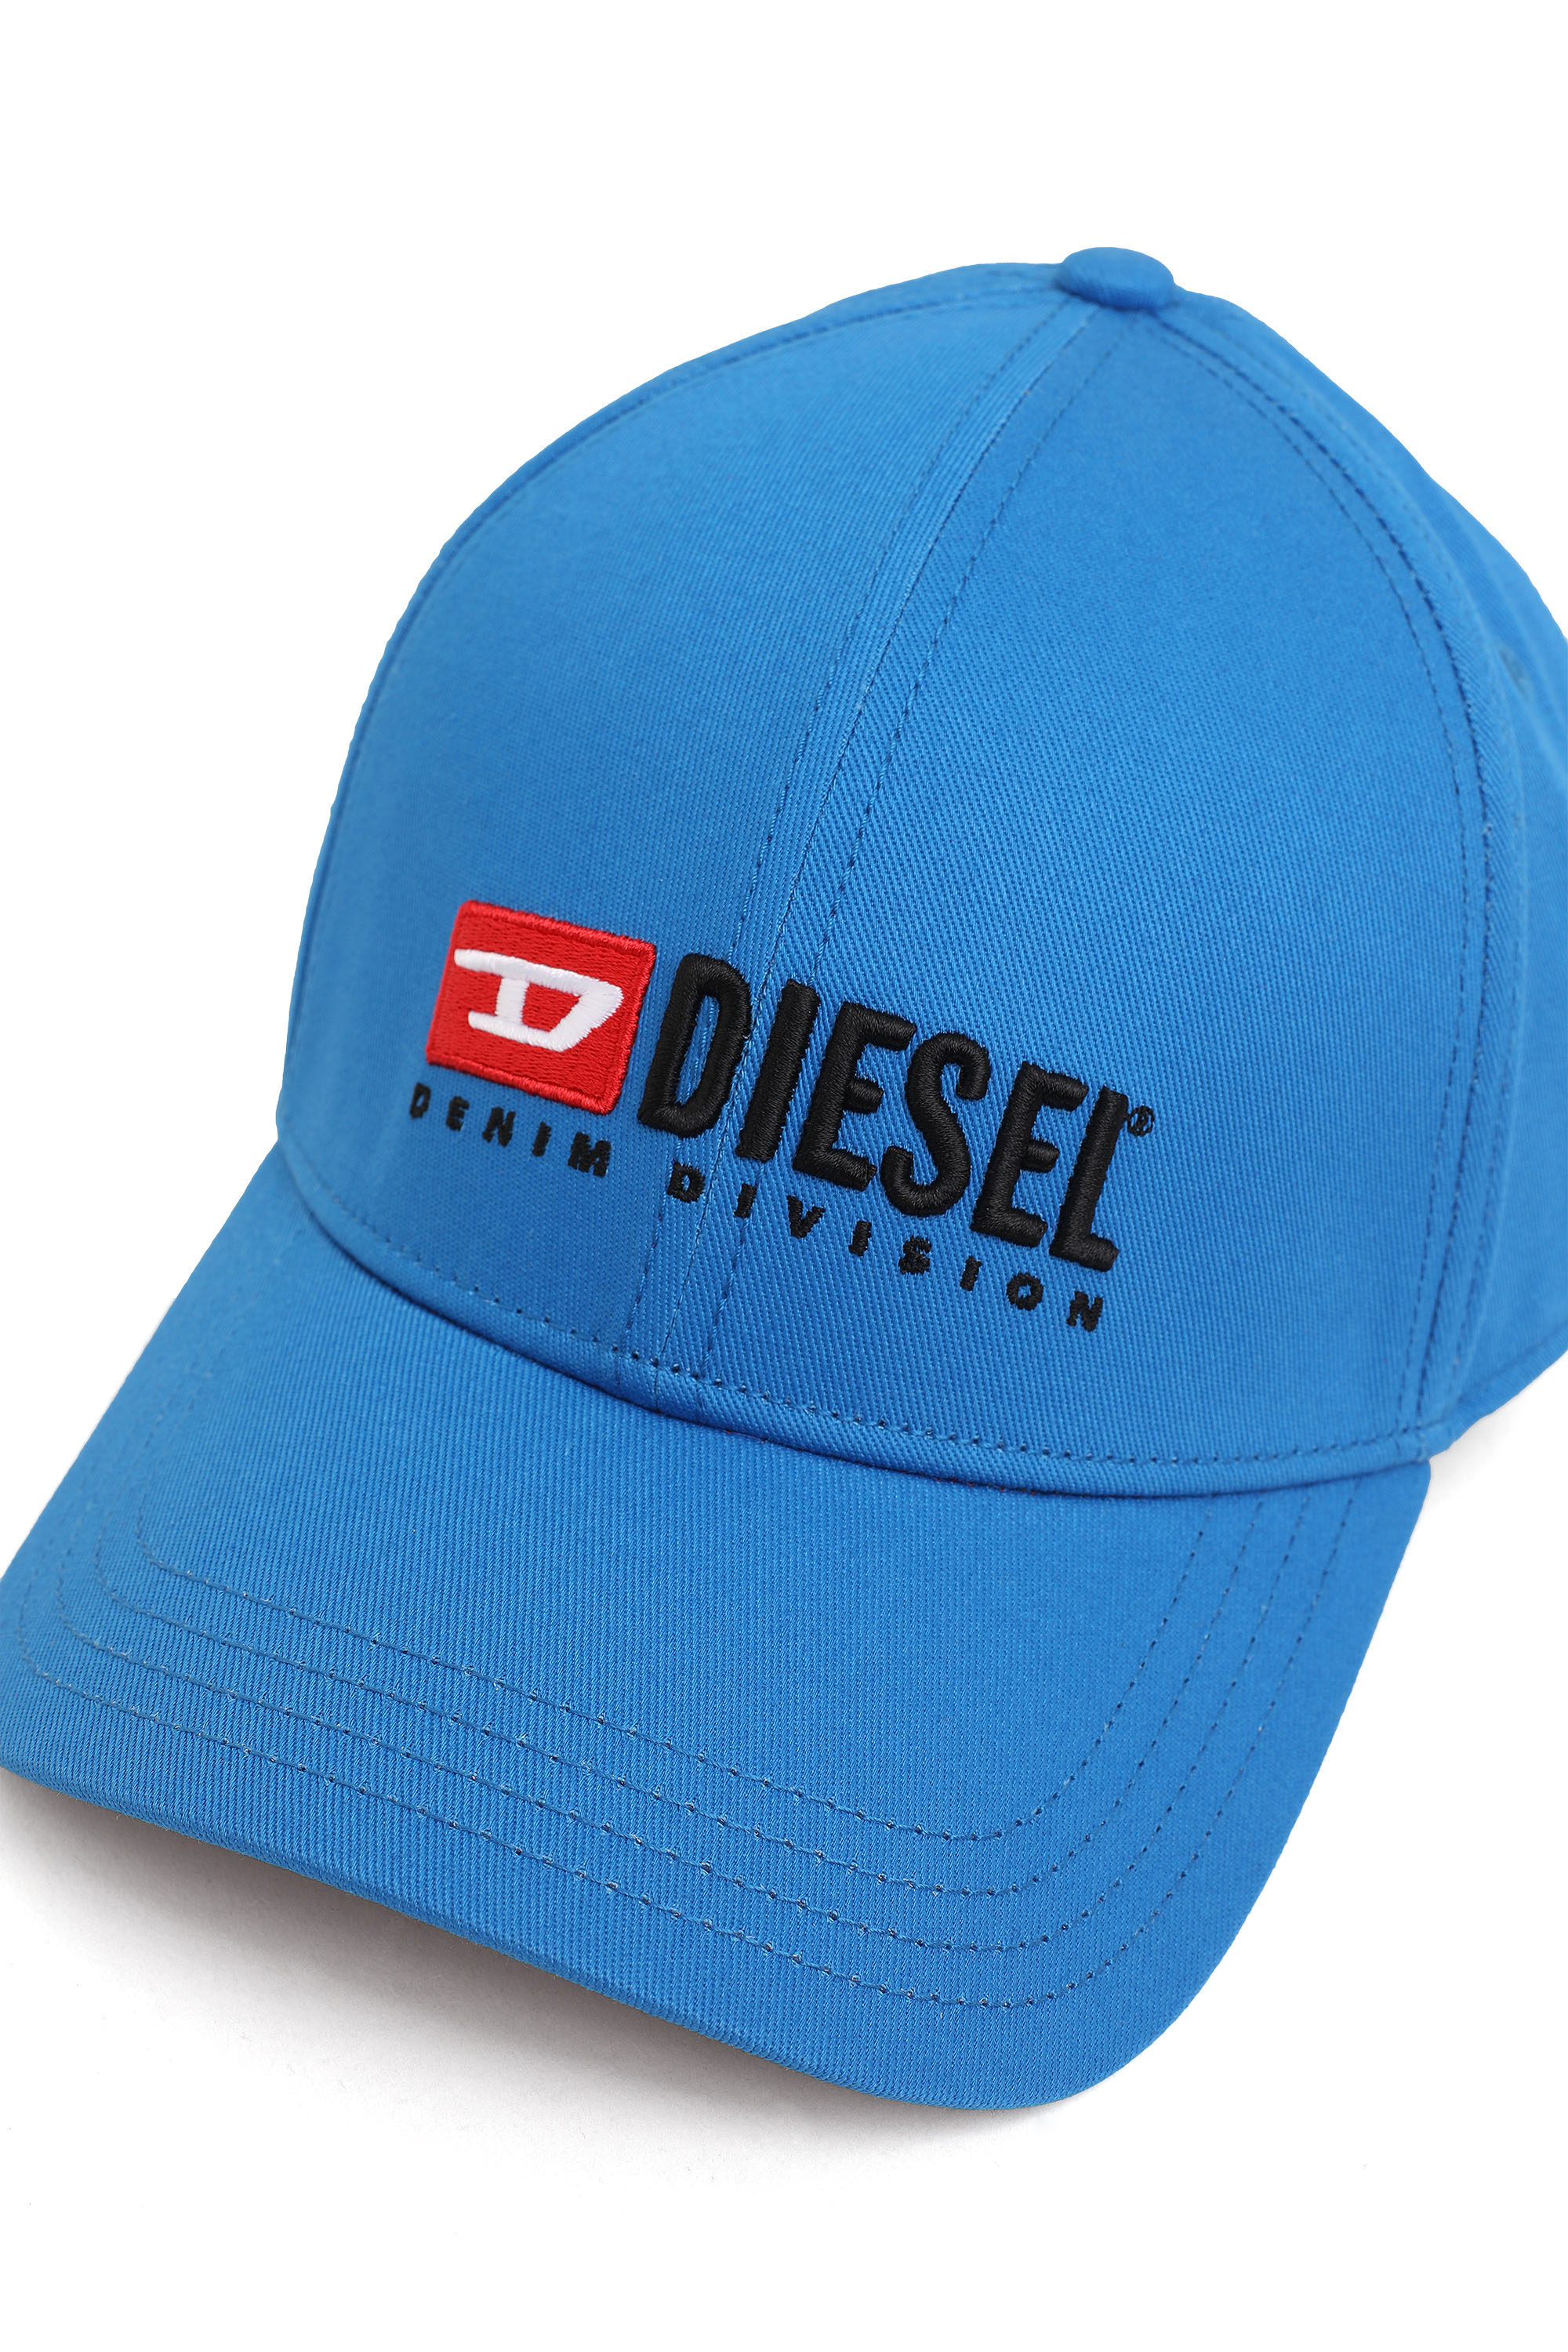 Diesel - CORRY-DIV, Blue - Image 3